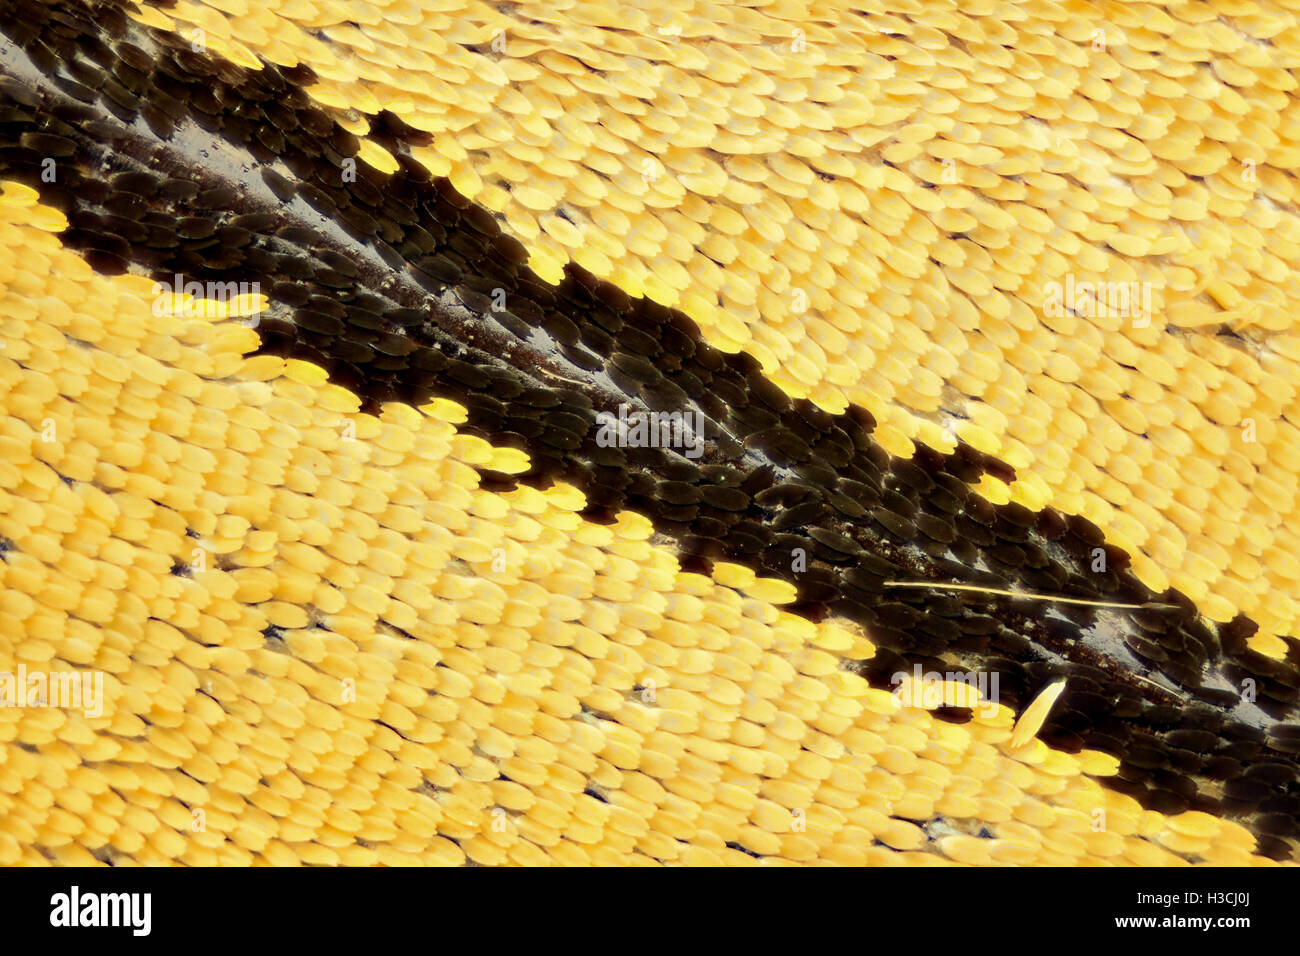 Extreme Vergrößerung - Schmetterlingsflügel am Mikroskop Stockfoto